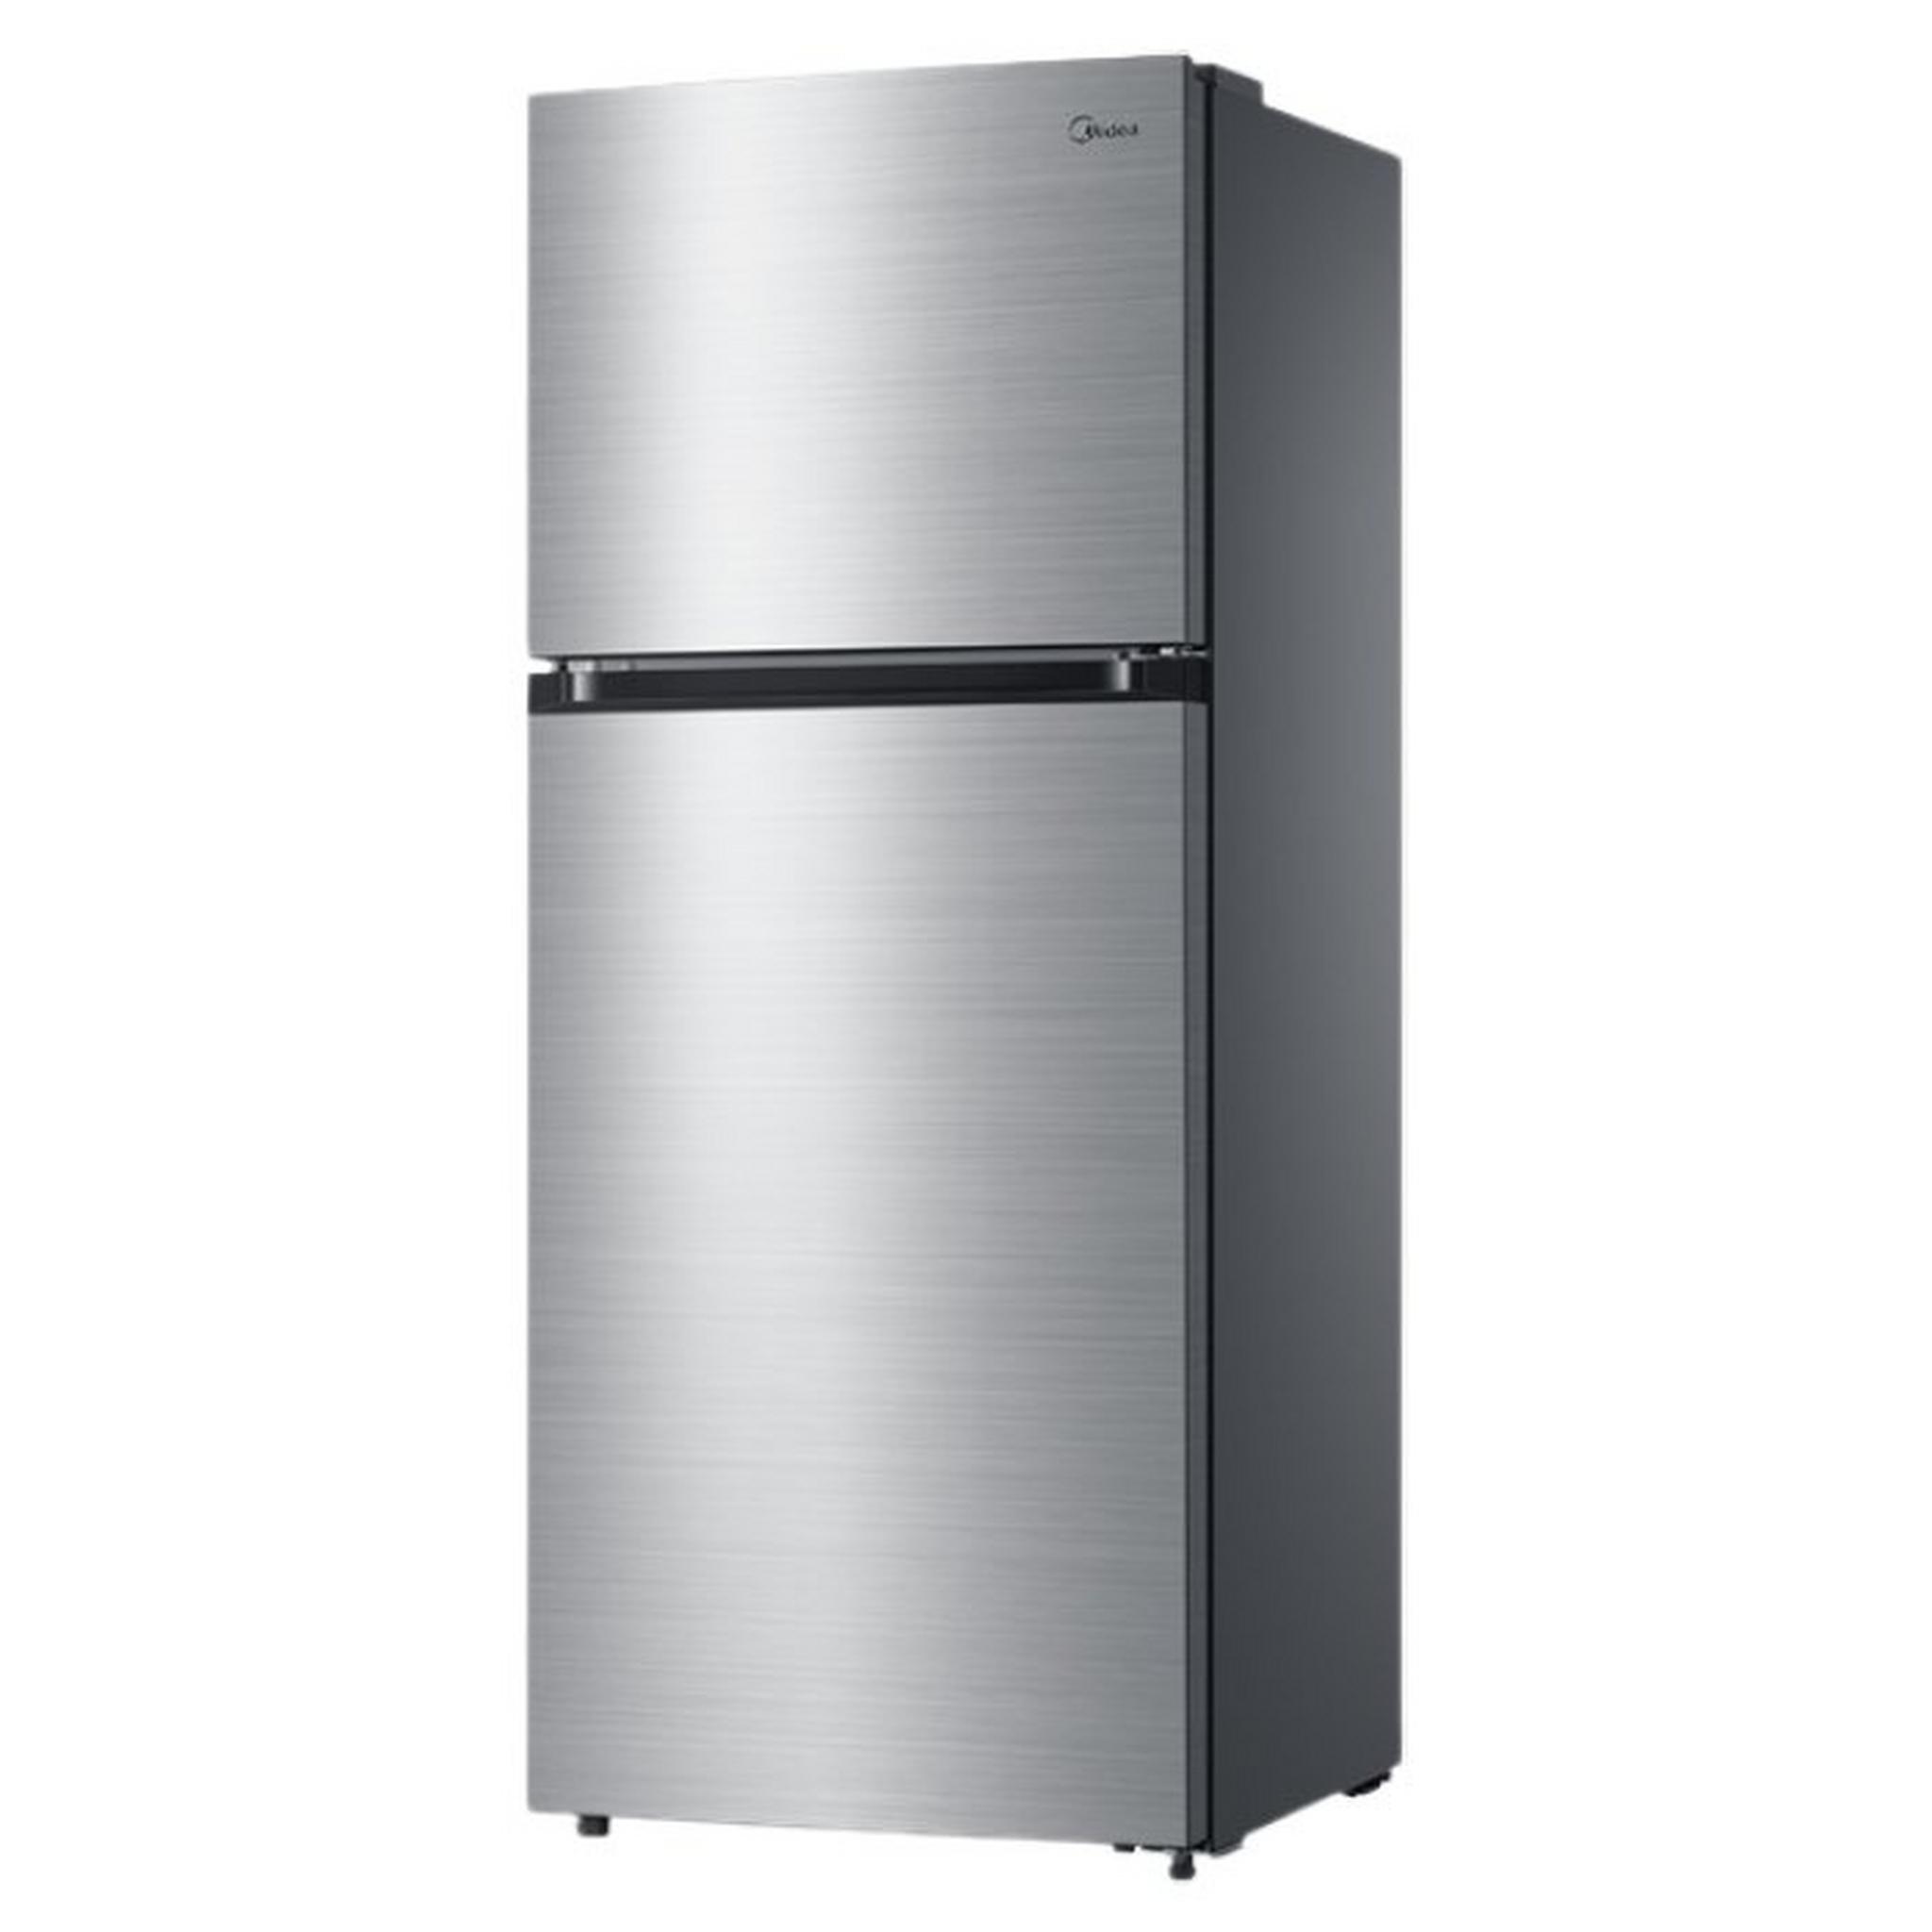 Midea 14.6 Cft. Top Mount Refrigerator (HD559FWEN) - Silver